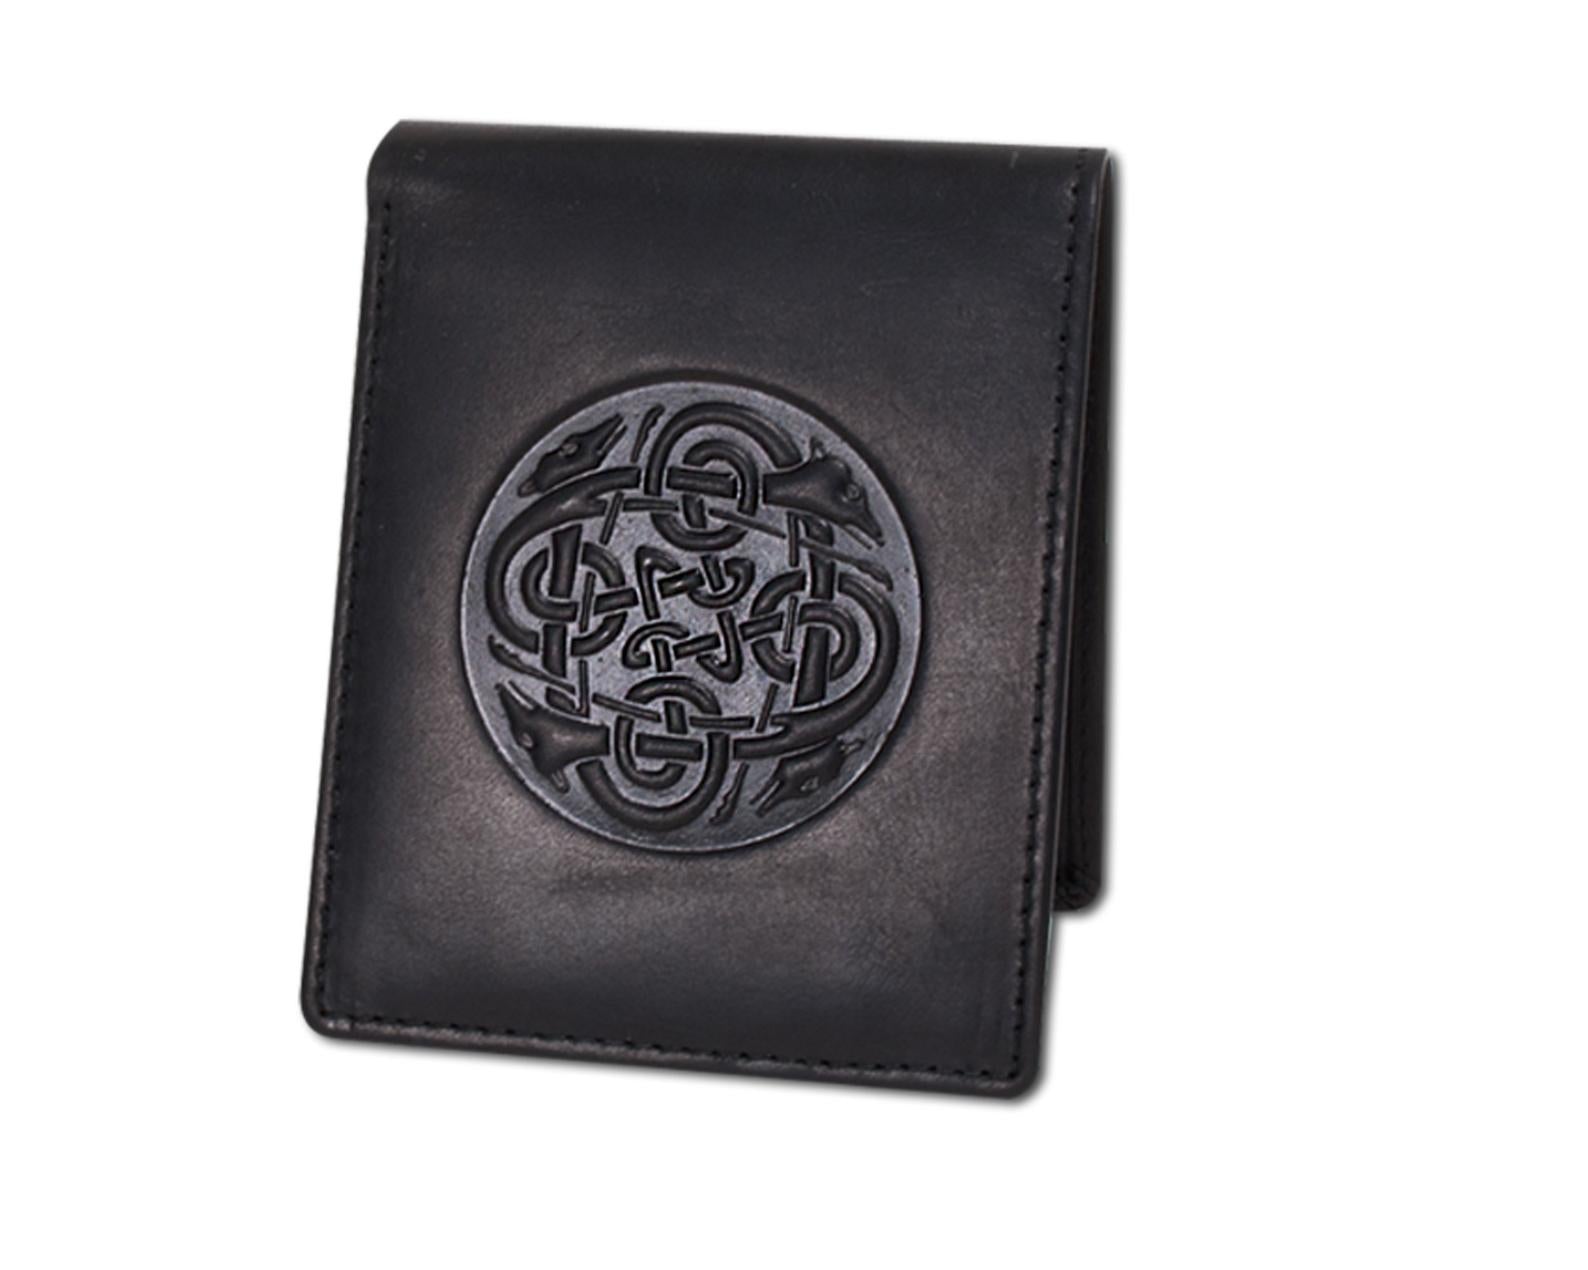  Cuchulainn leather bi-fold wallet black